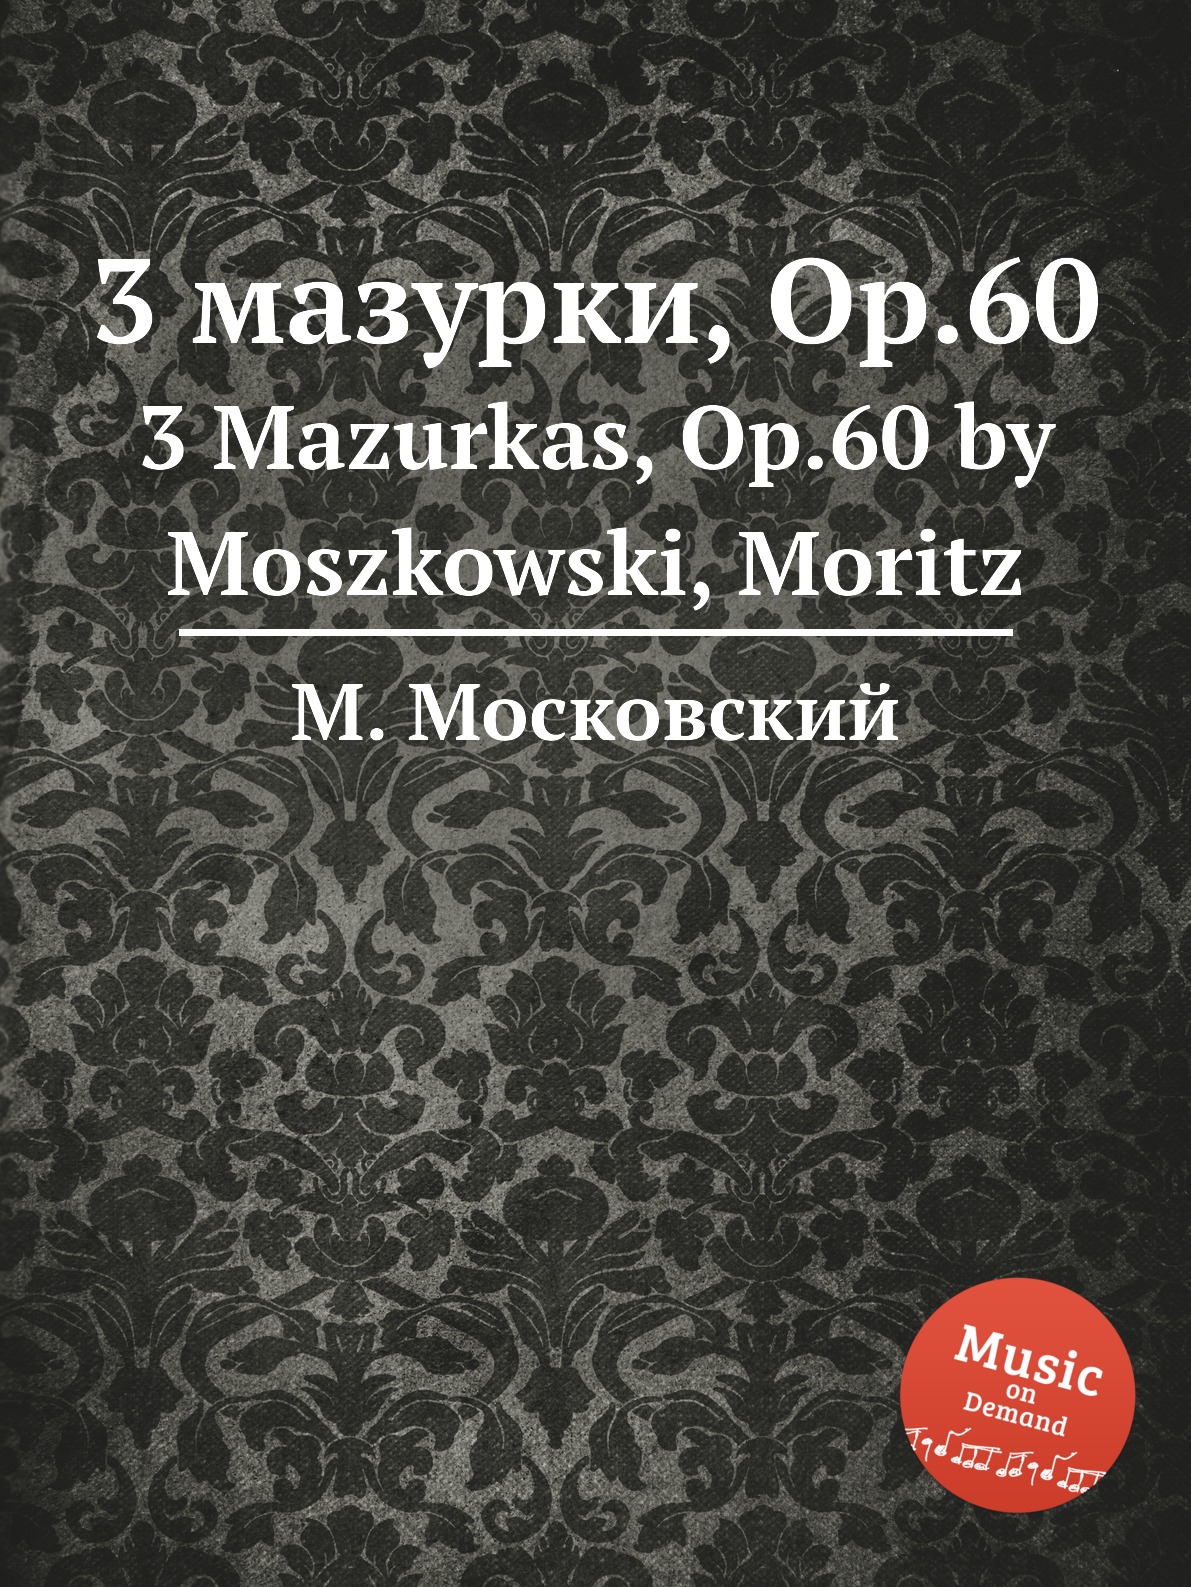 фото Книга 3 мазурки, op.60. 3 mazurkas, op.60 by moszkowski, moritz музбука